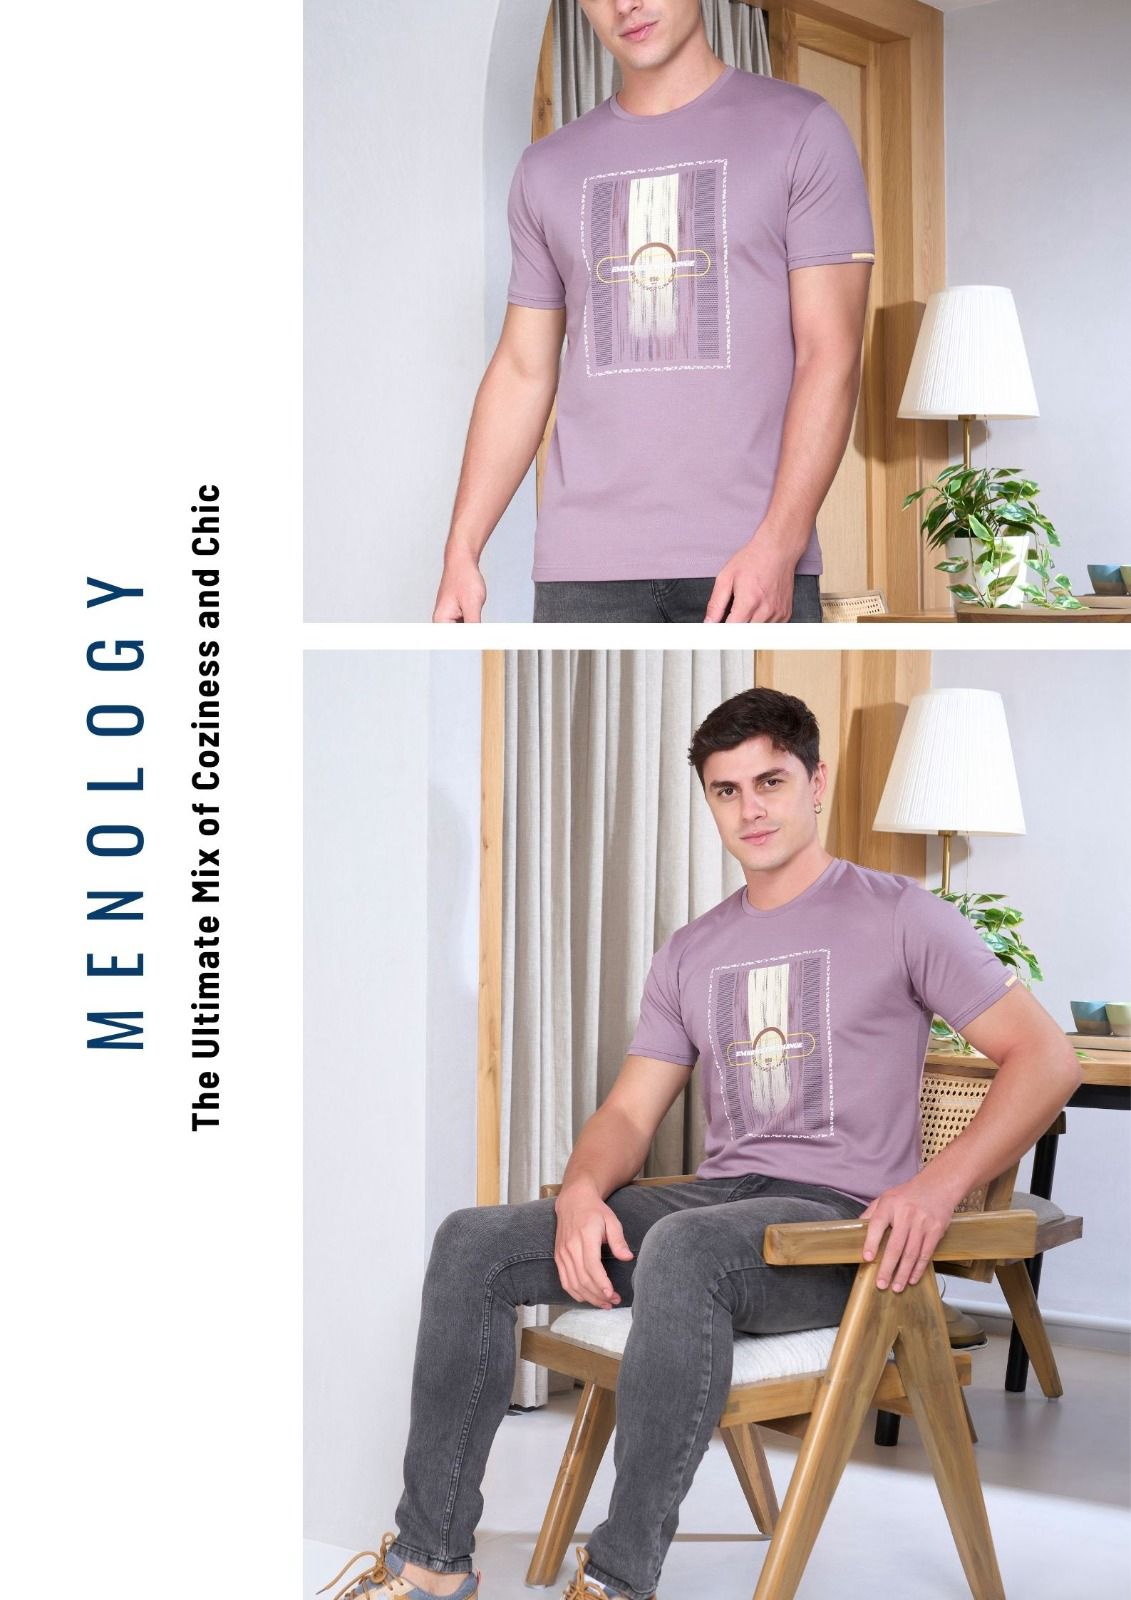 Iho E 179 Menology Knit Mens Tshirts Exporter